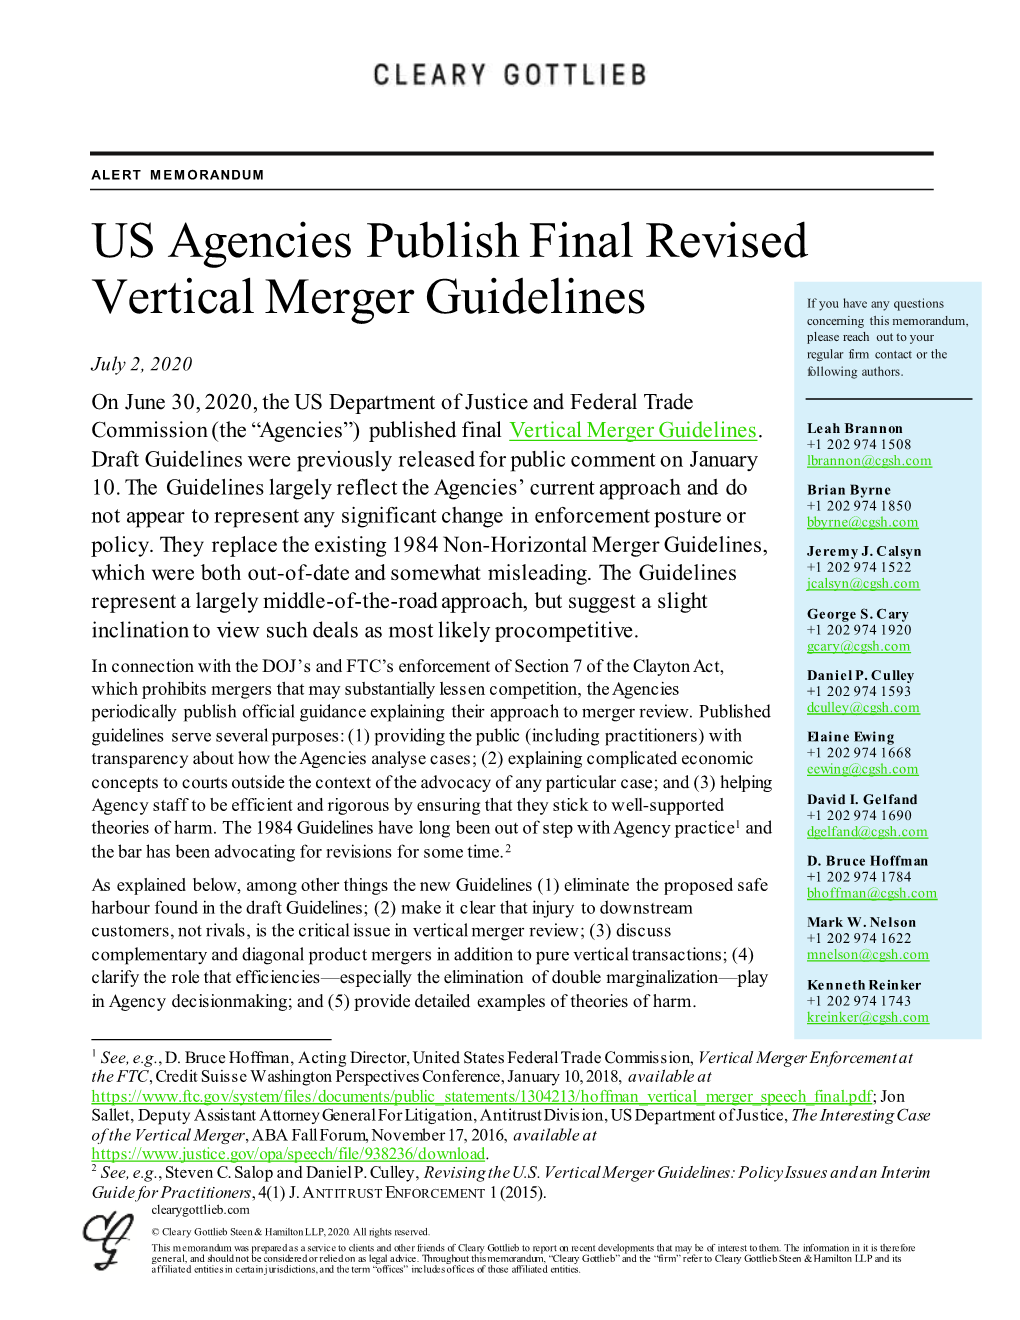 US Agencies Publish Final Revised Vertical Merger Guidelines